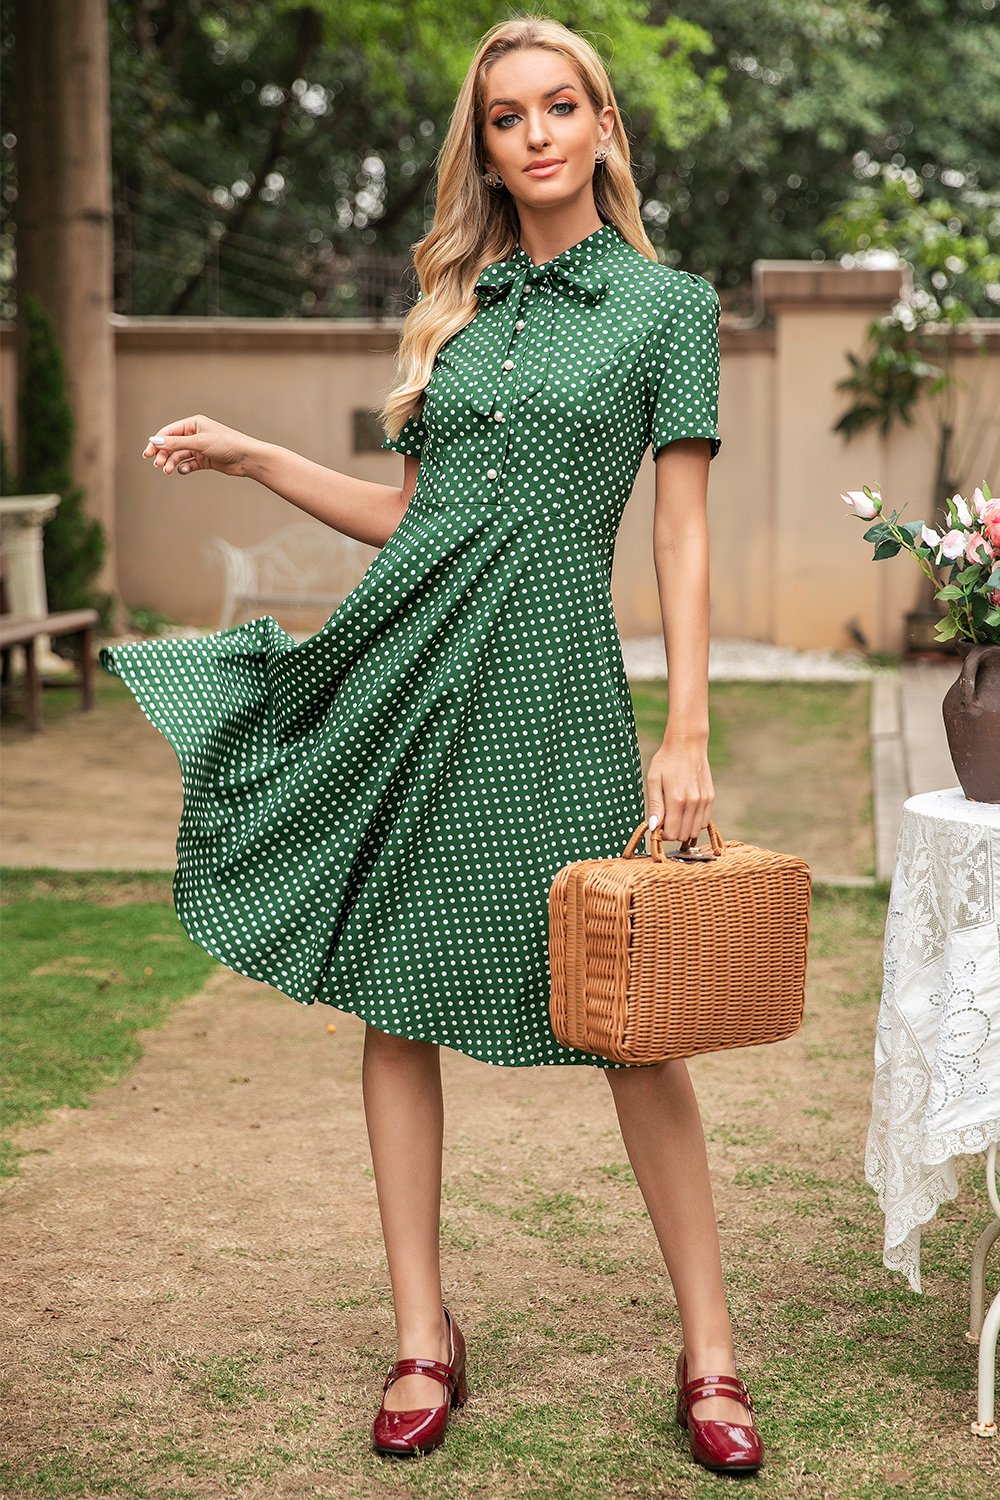 Grünes Polka Dots Vintage Sommerkleid